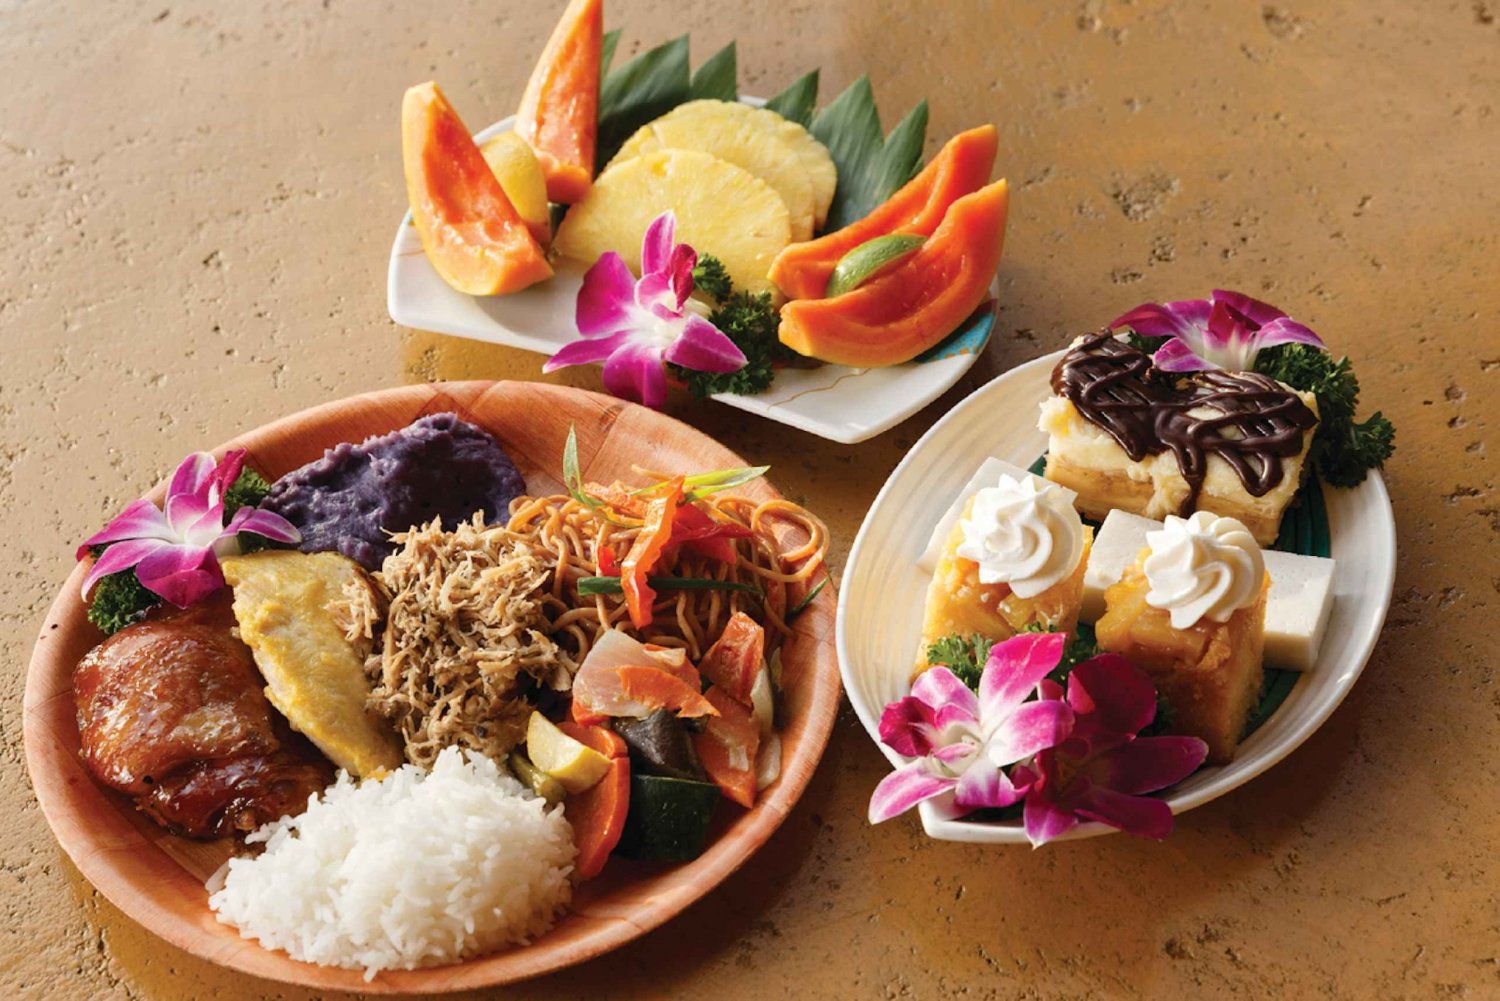 Kauai: Buffet Dinner with Open Bar and Luau Kalamaku Show